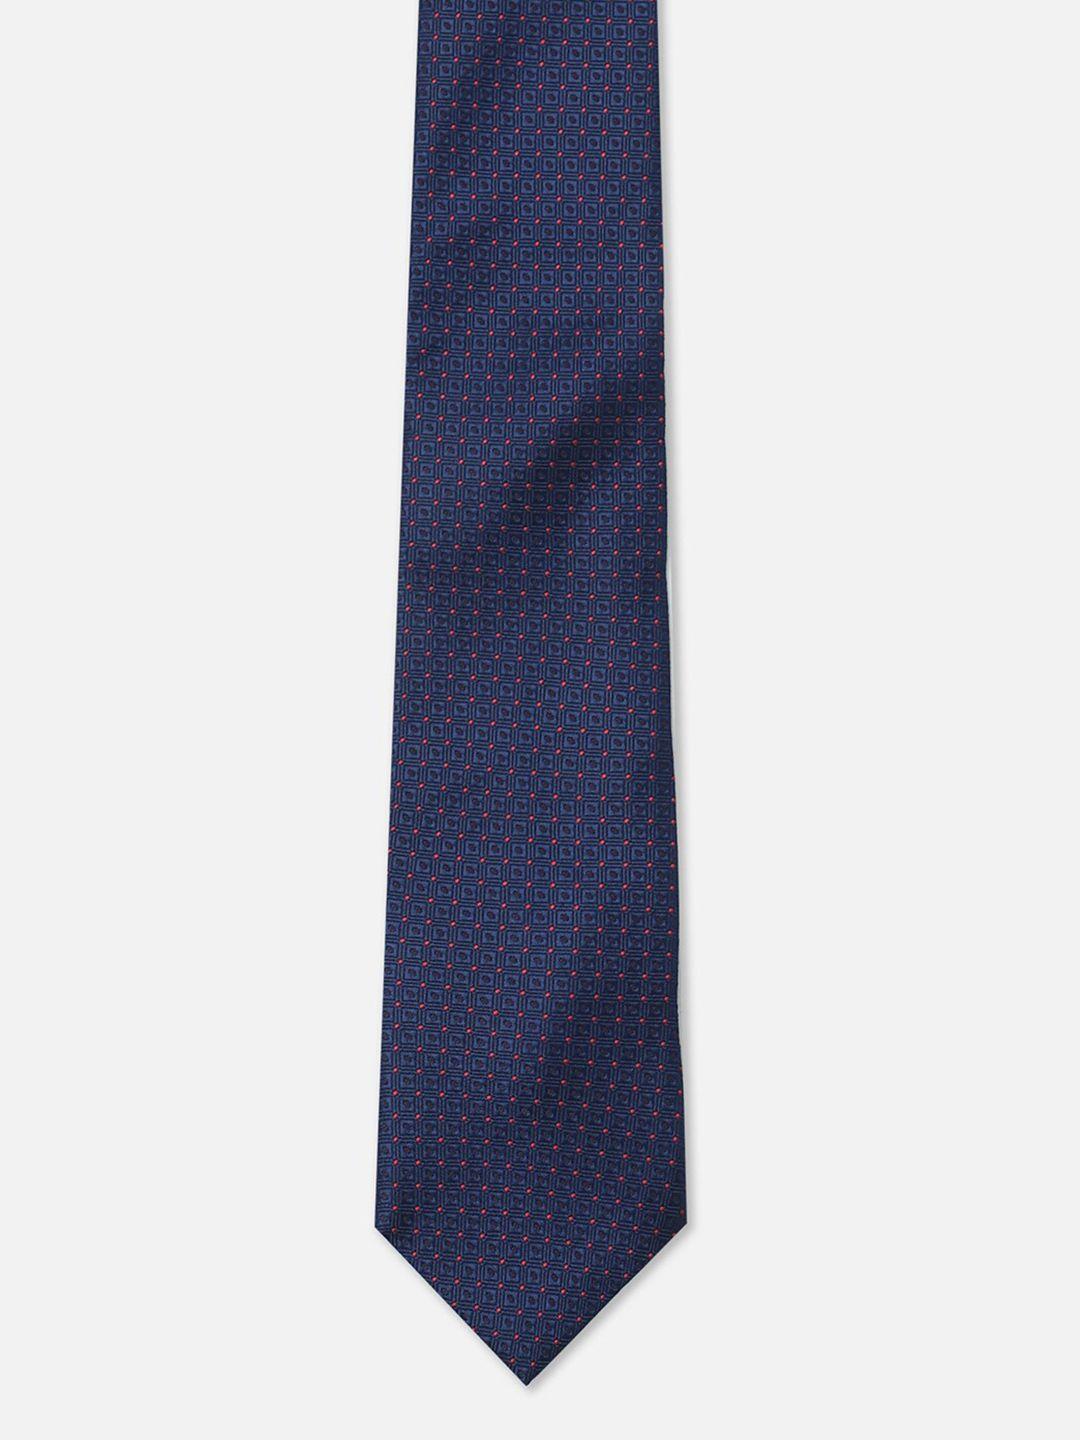 allen solly men woven design formal skinny tie